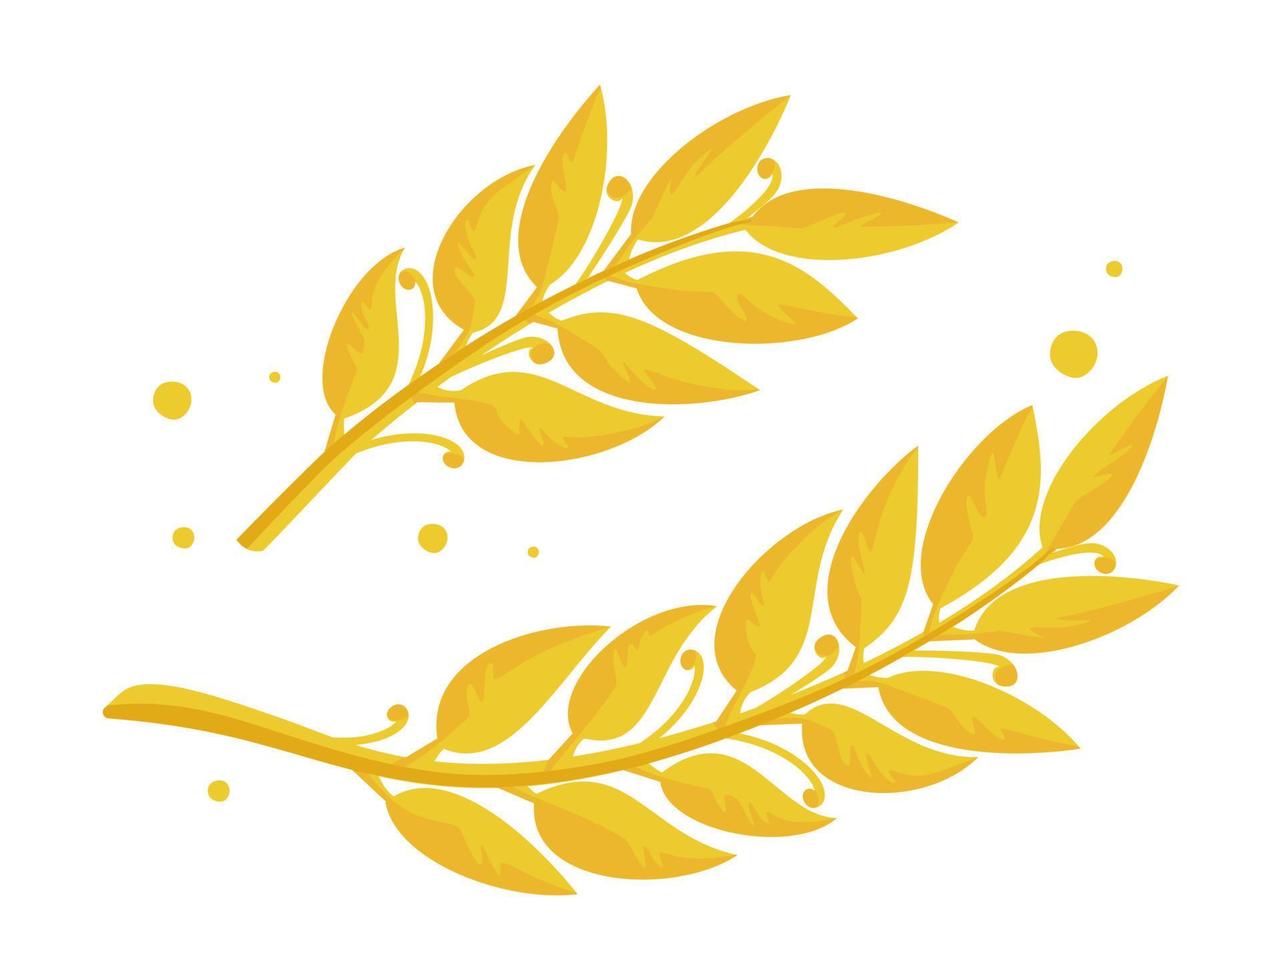 gyllene lager gren symbol för segerdagen vektorillustration isolerad på vit bakgrund vektor